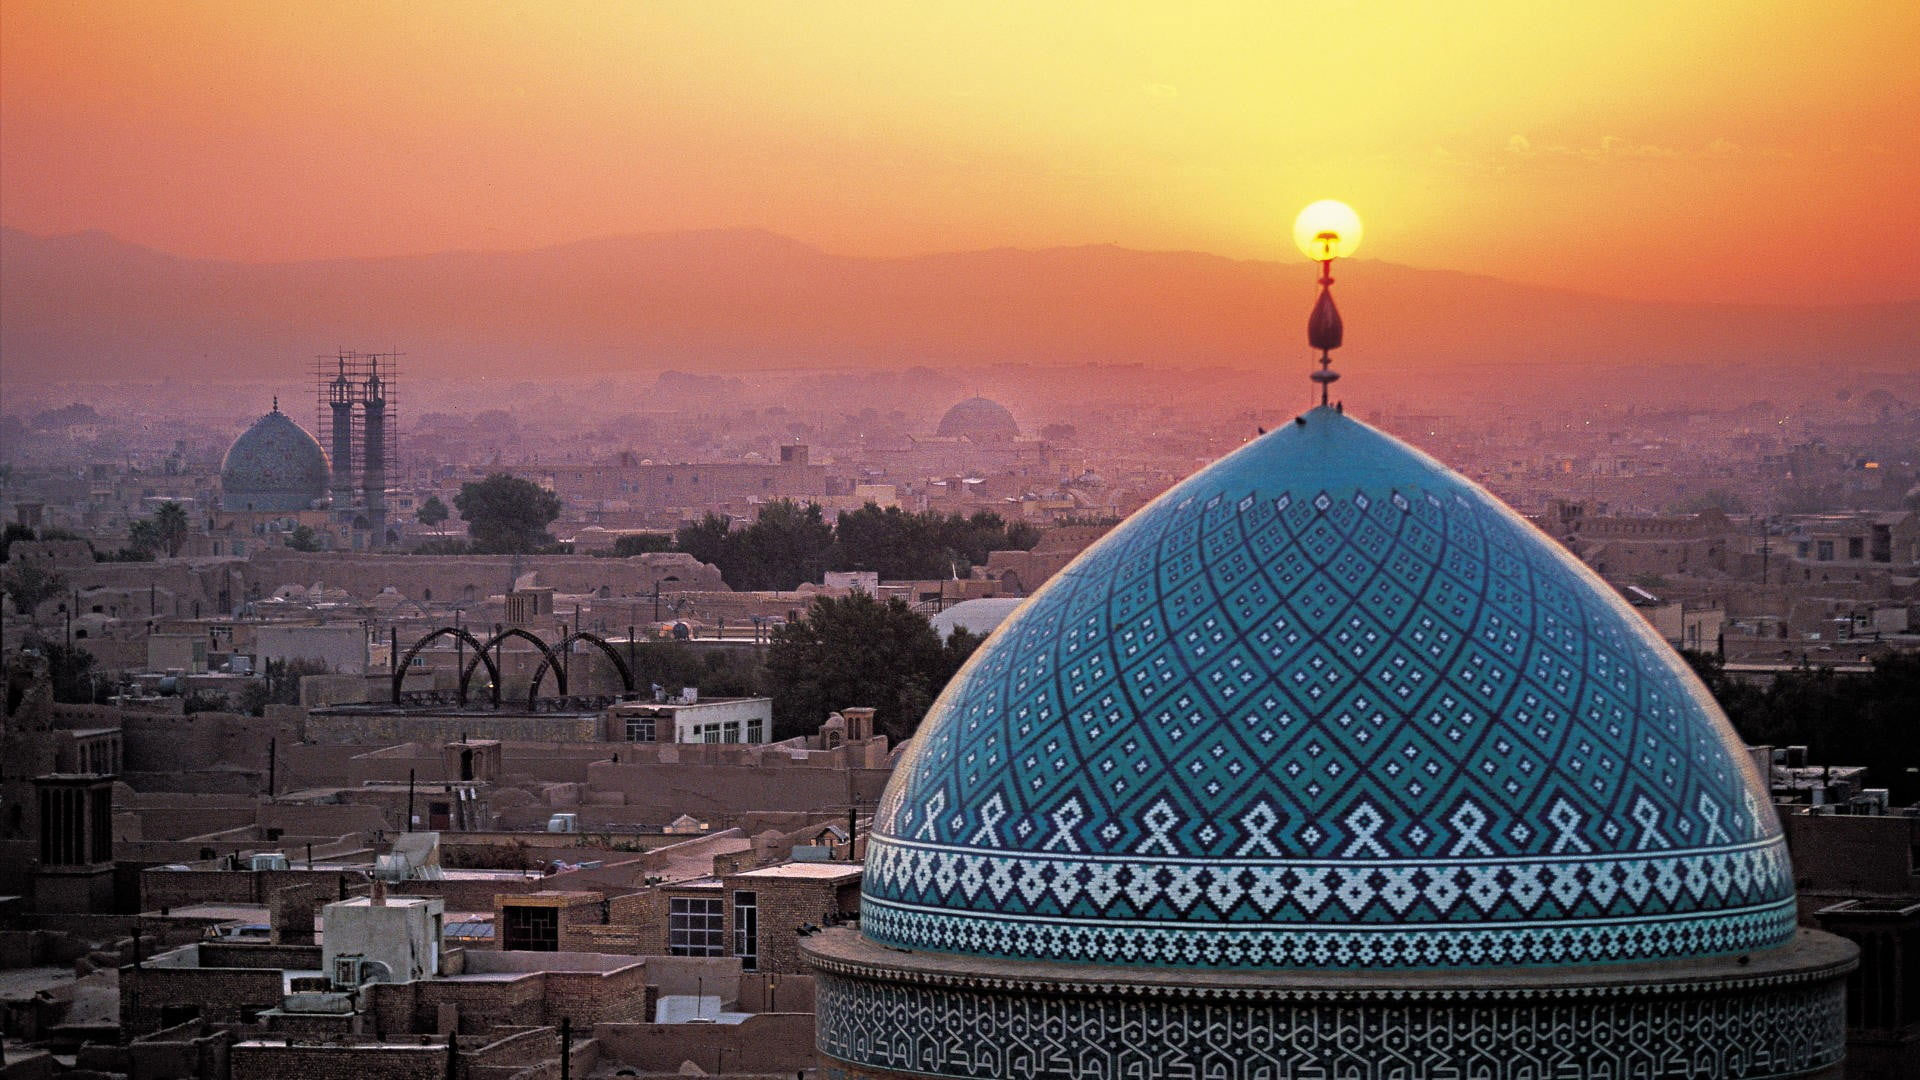 Wallpaper Yazd, Iran, Islam, Sunset, Islamic Architecture